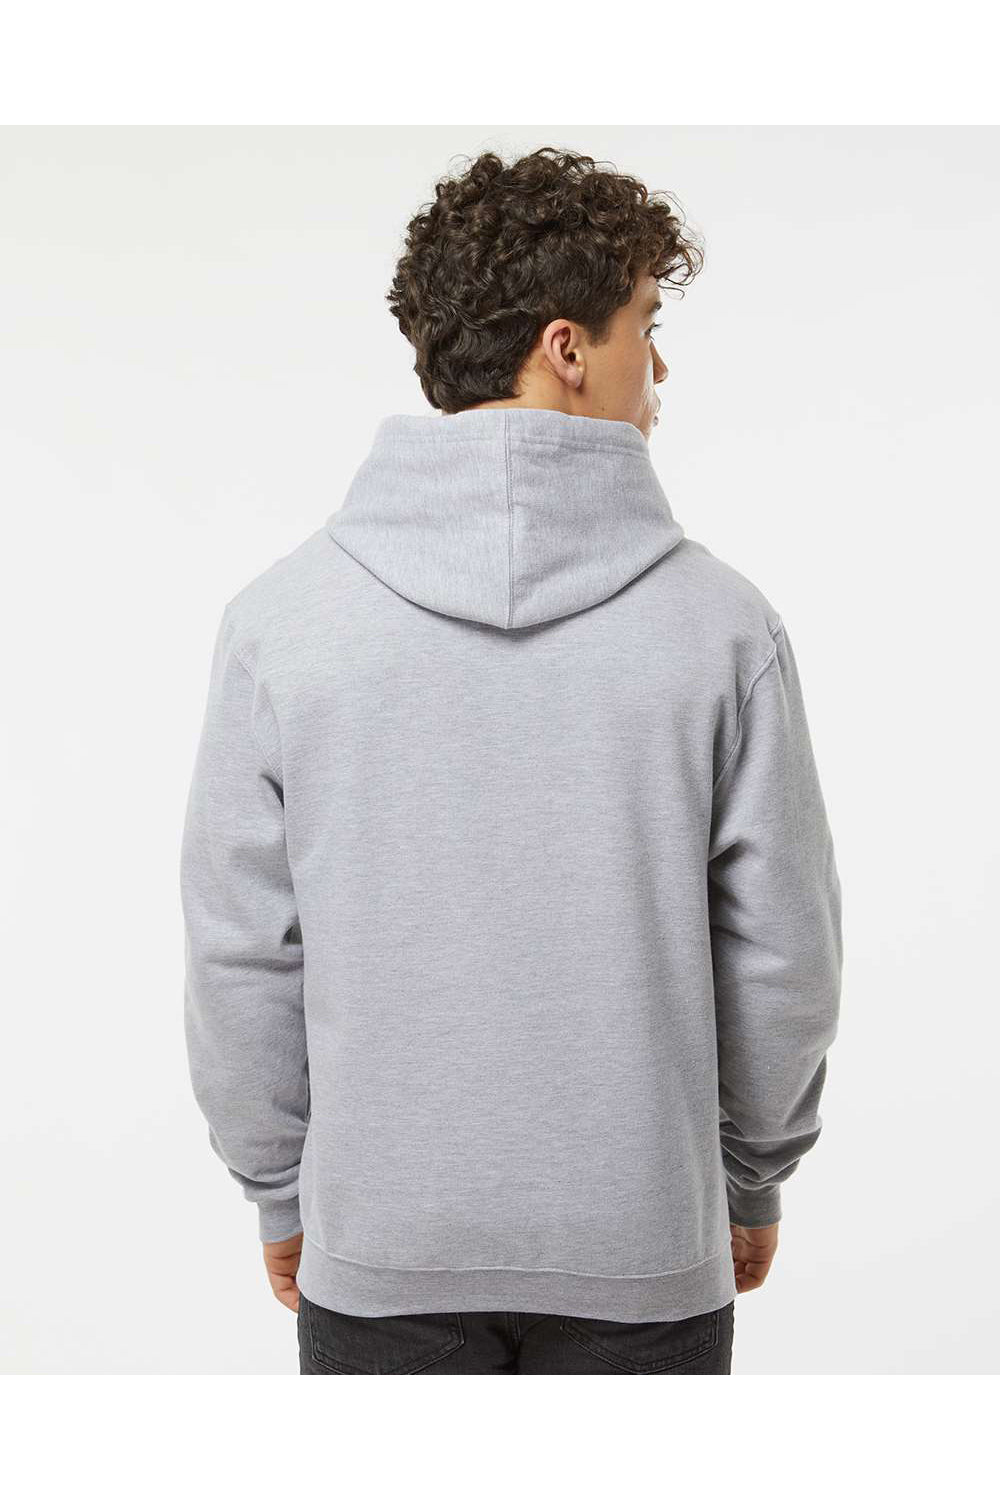 Tultex 320 Mens Fleece Hooded Sweatshirt Hoodie Heather Grey Model Back